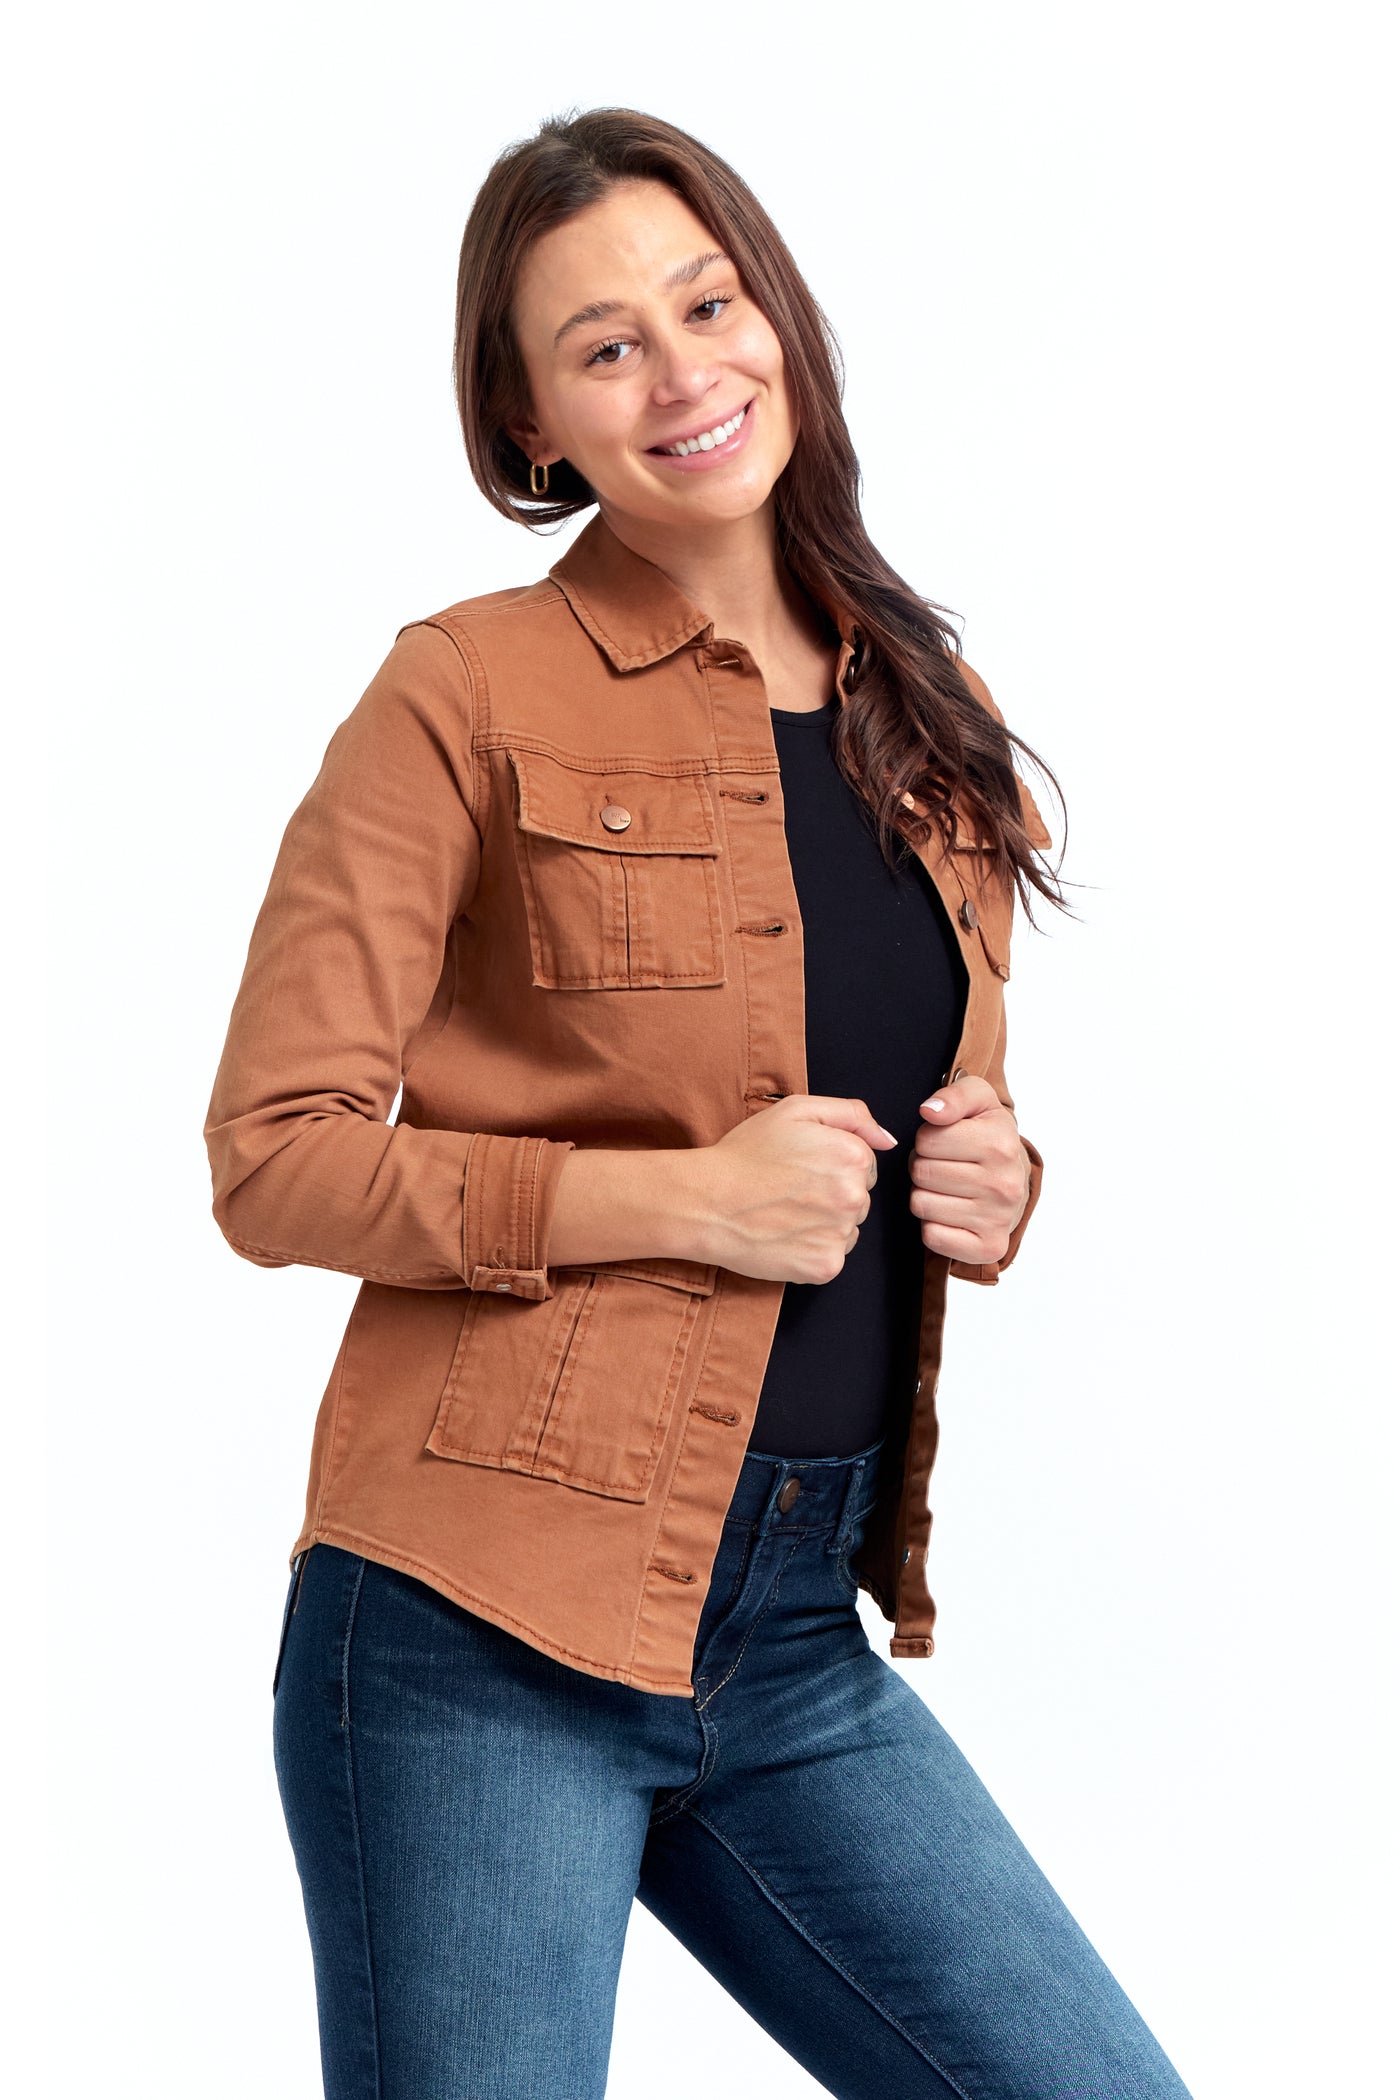 Parlio Full Sleeve Solid Women Jacket - Buy Parlio Full Sleeve Solid Women  Jacket Online at Best Prices in India | Flipkart.com